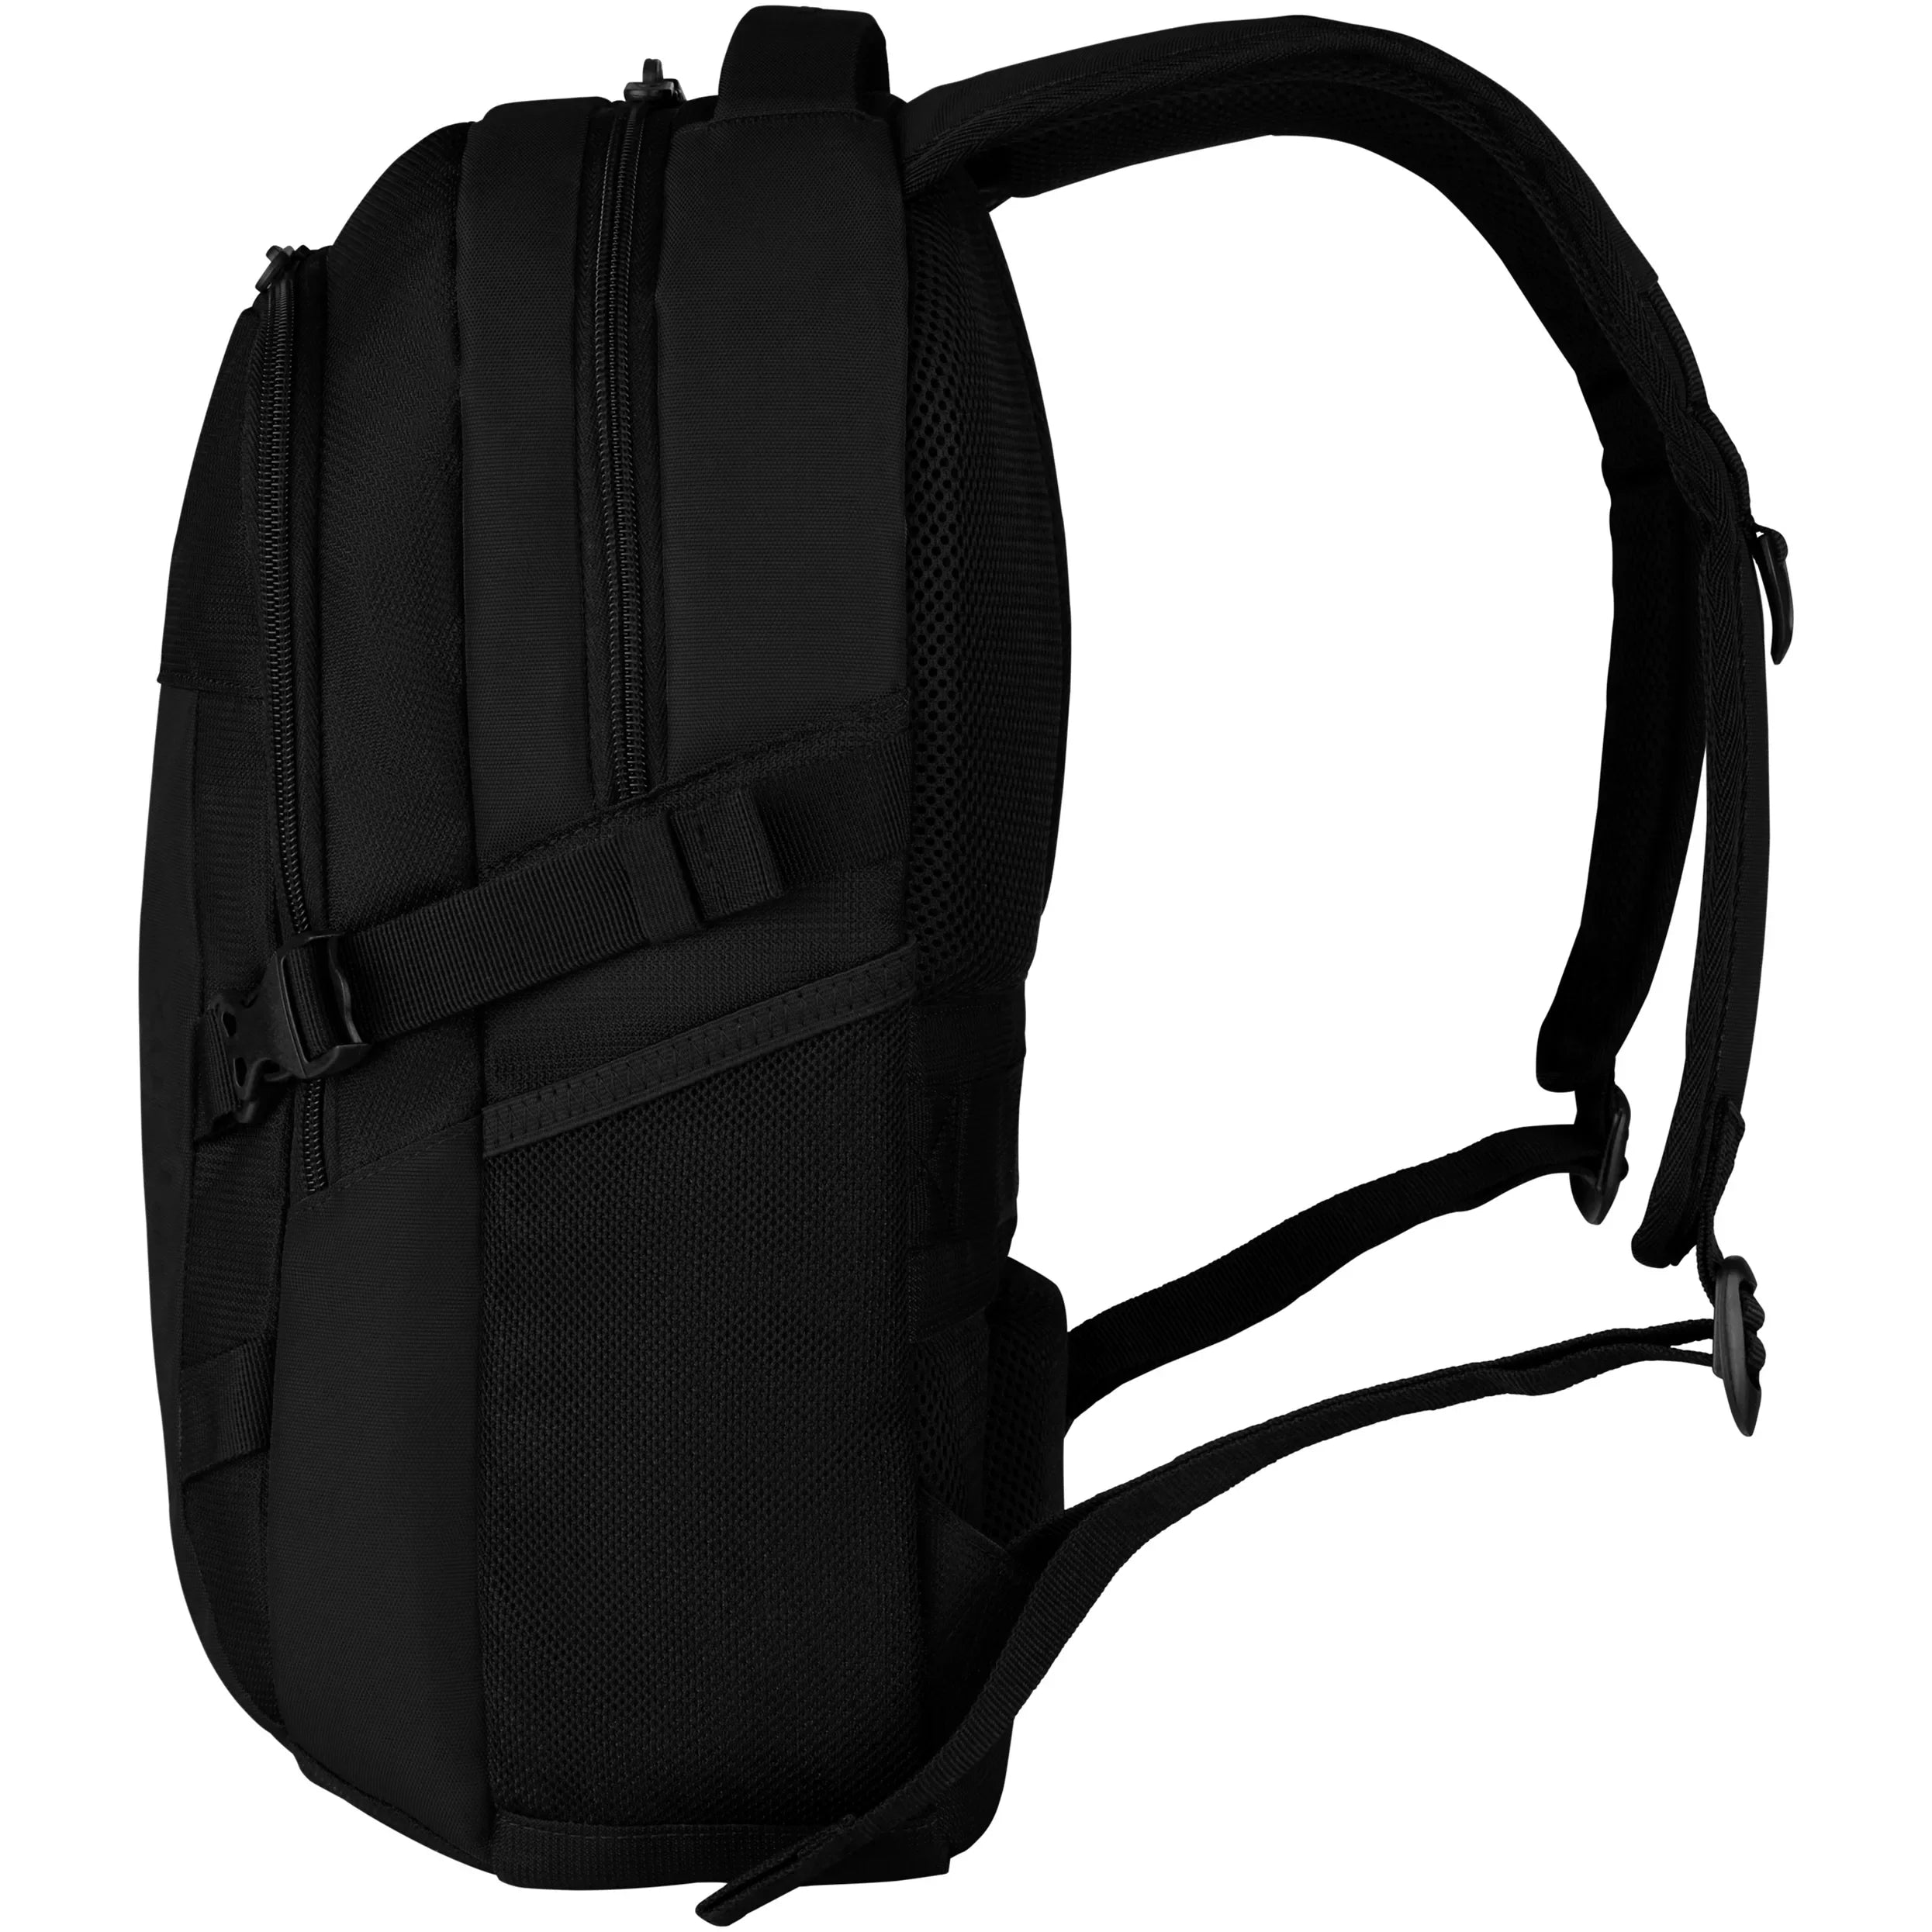 Victorinox VX Sport EVO Compact Backpack 46 cm - Black